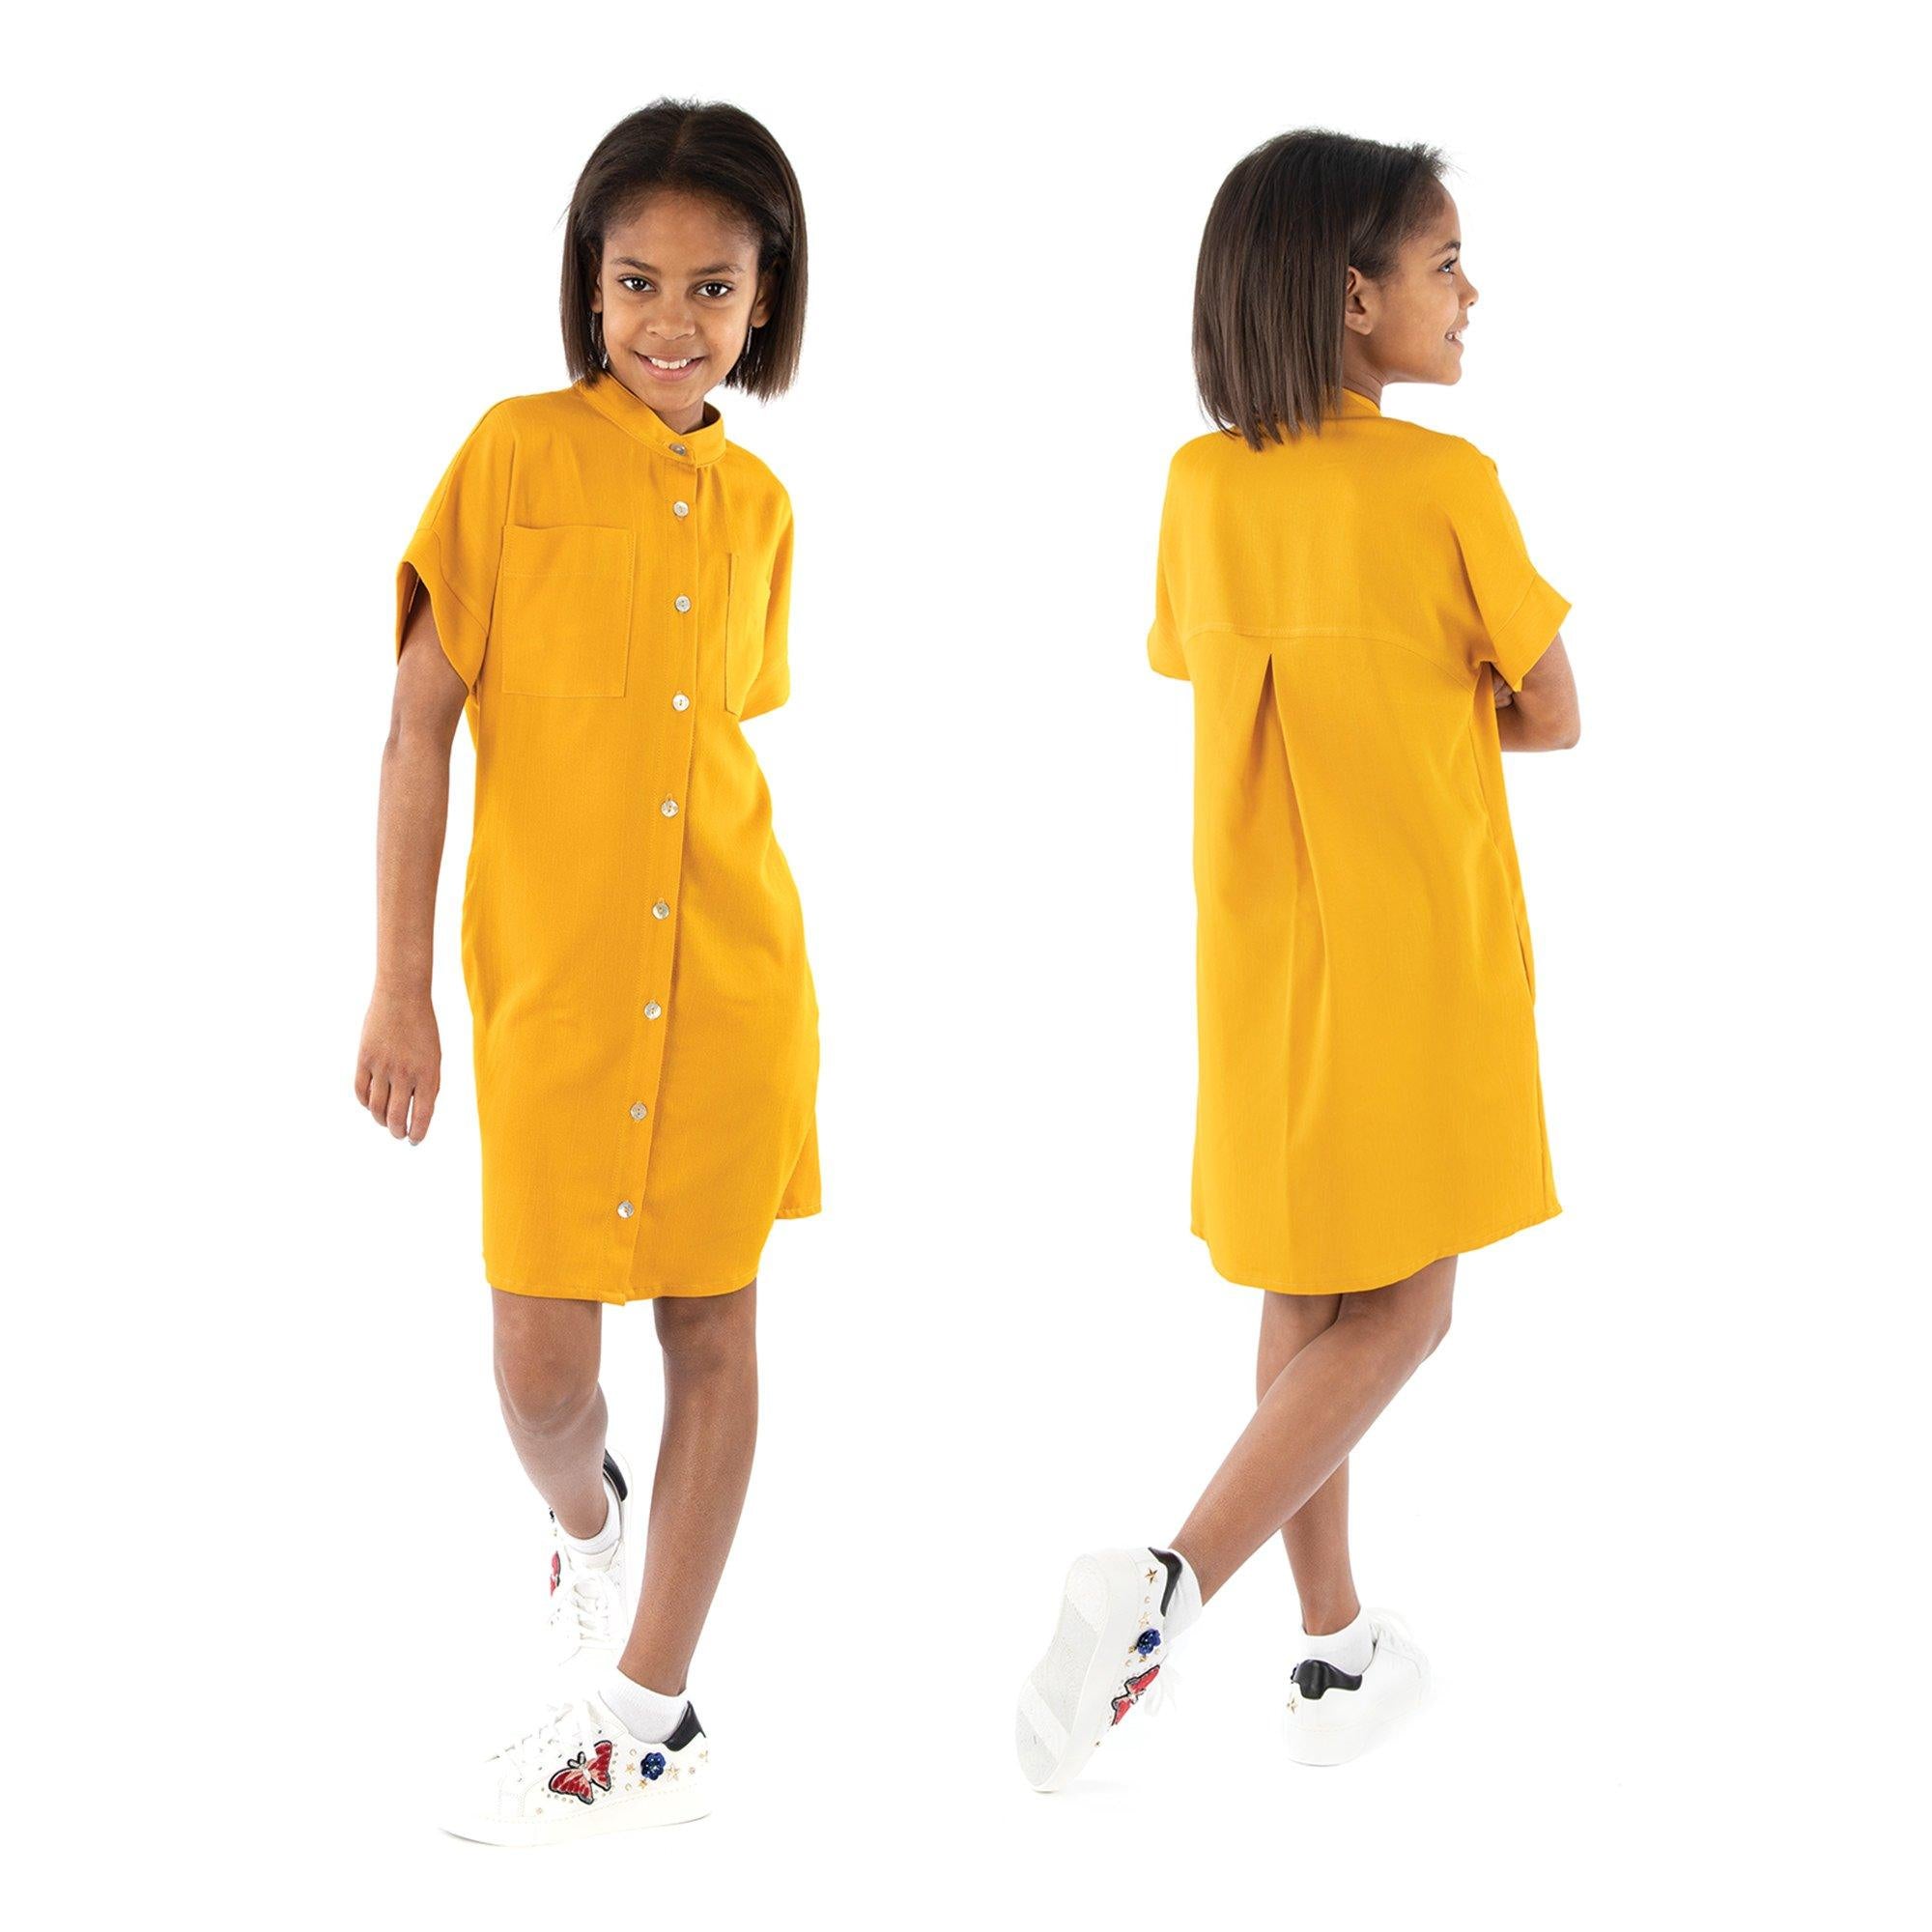 Jalie 4020 - FLORENCE - Shirtdress for girls